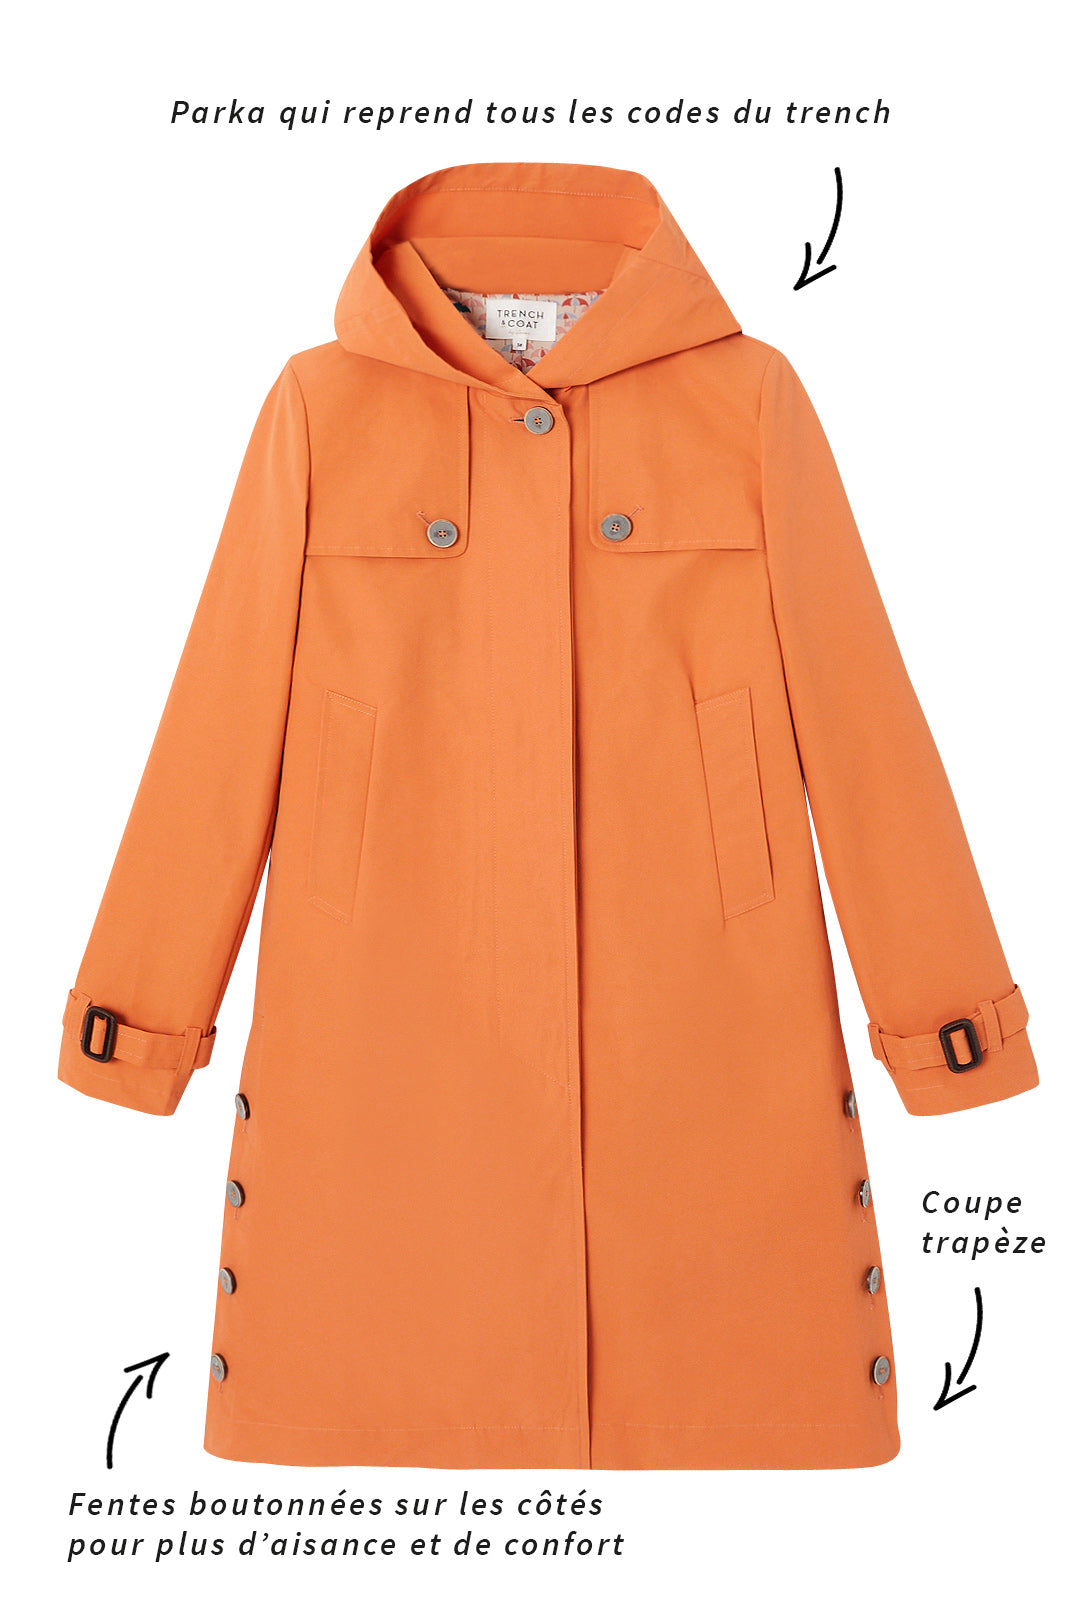 BASSANE-Retro-style redding coat in orange cotton blend